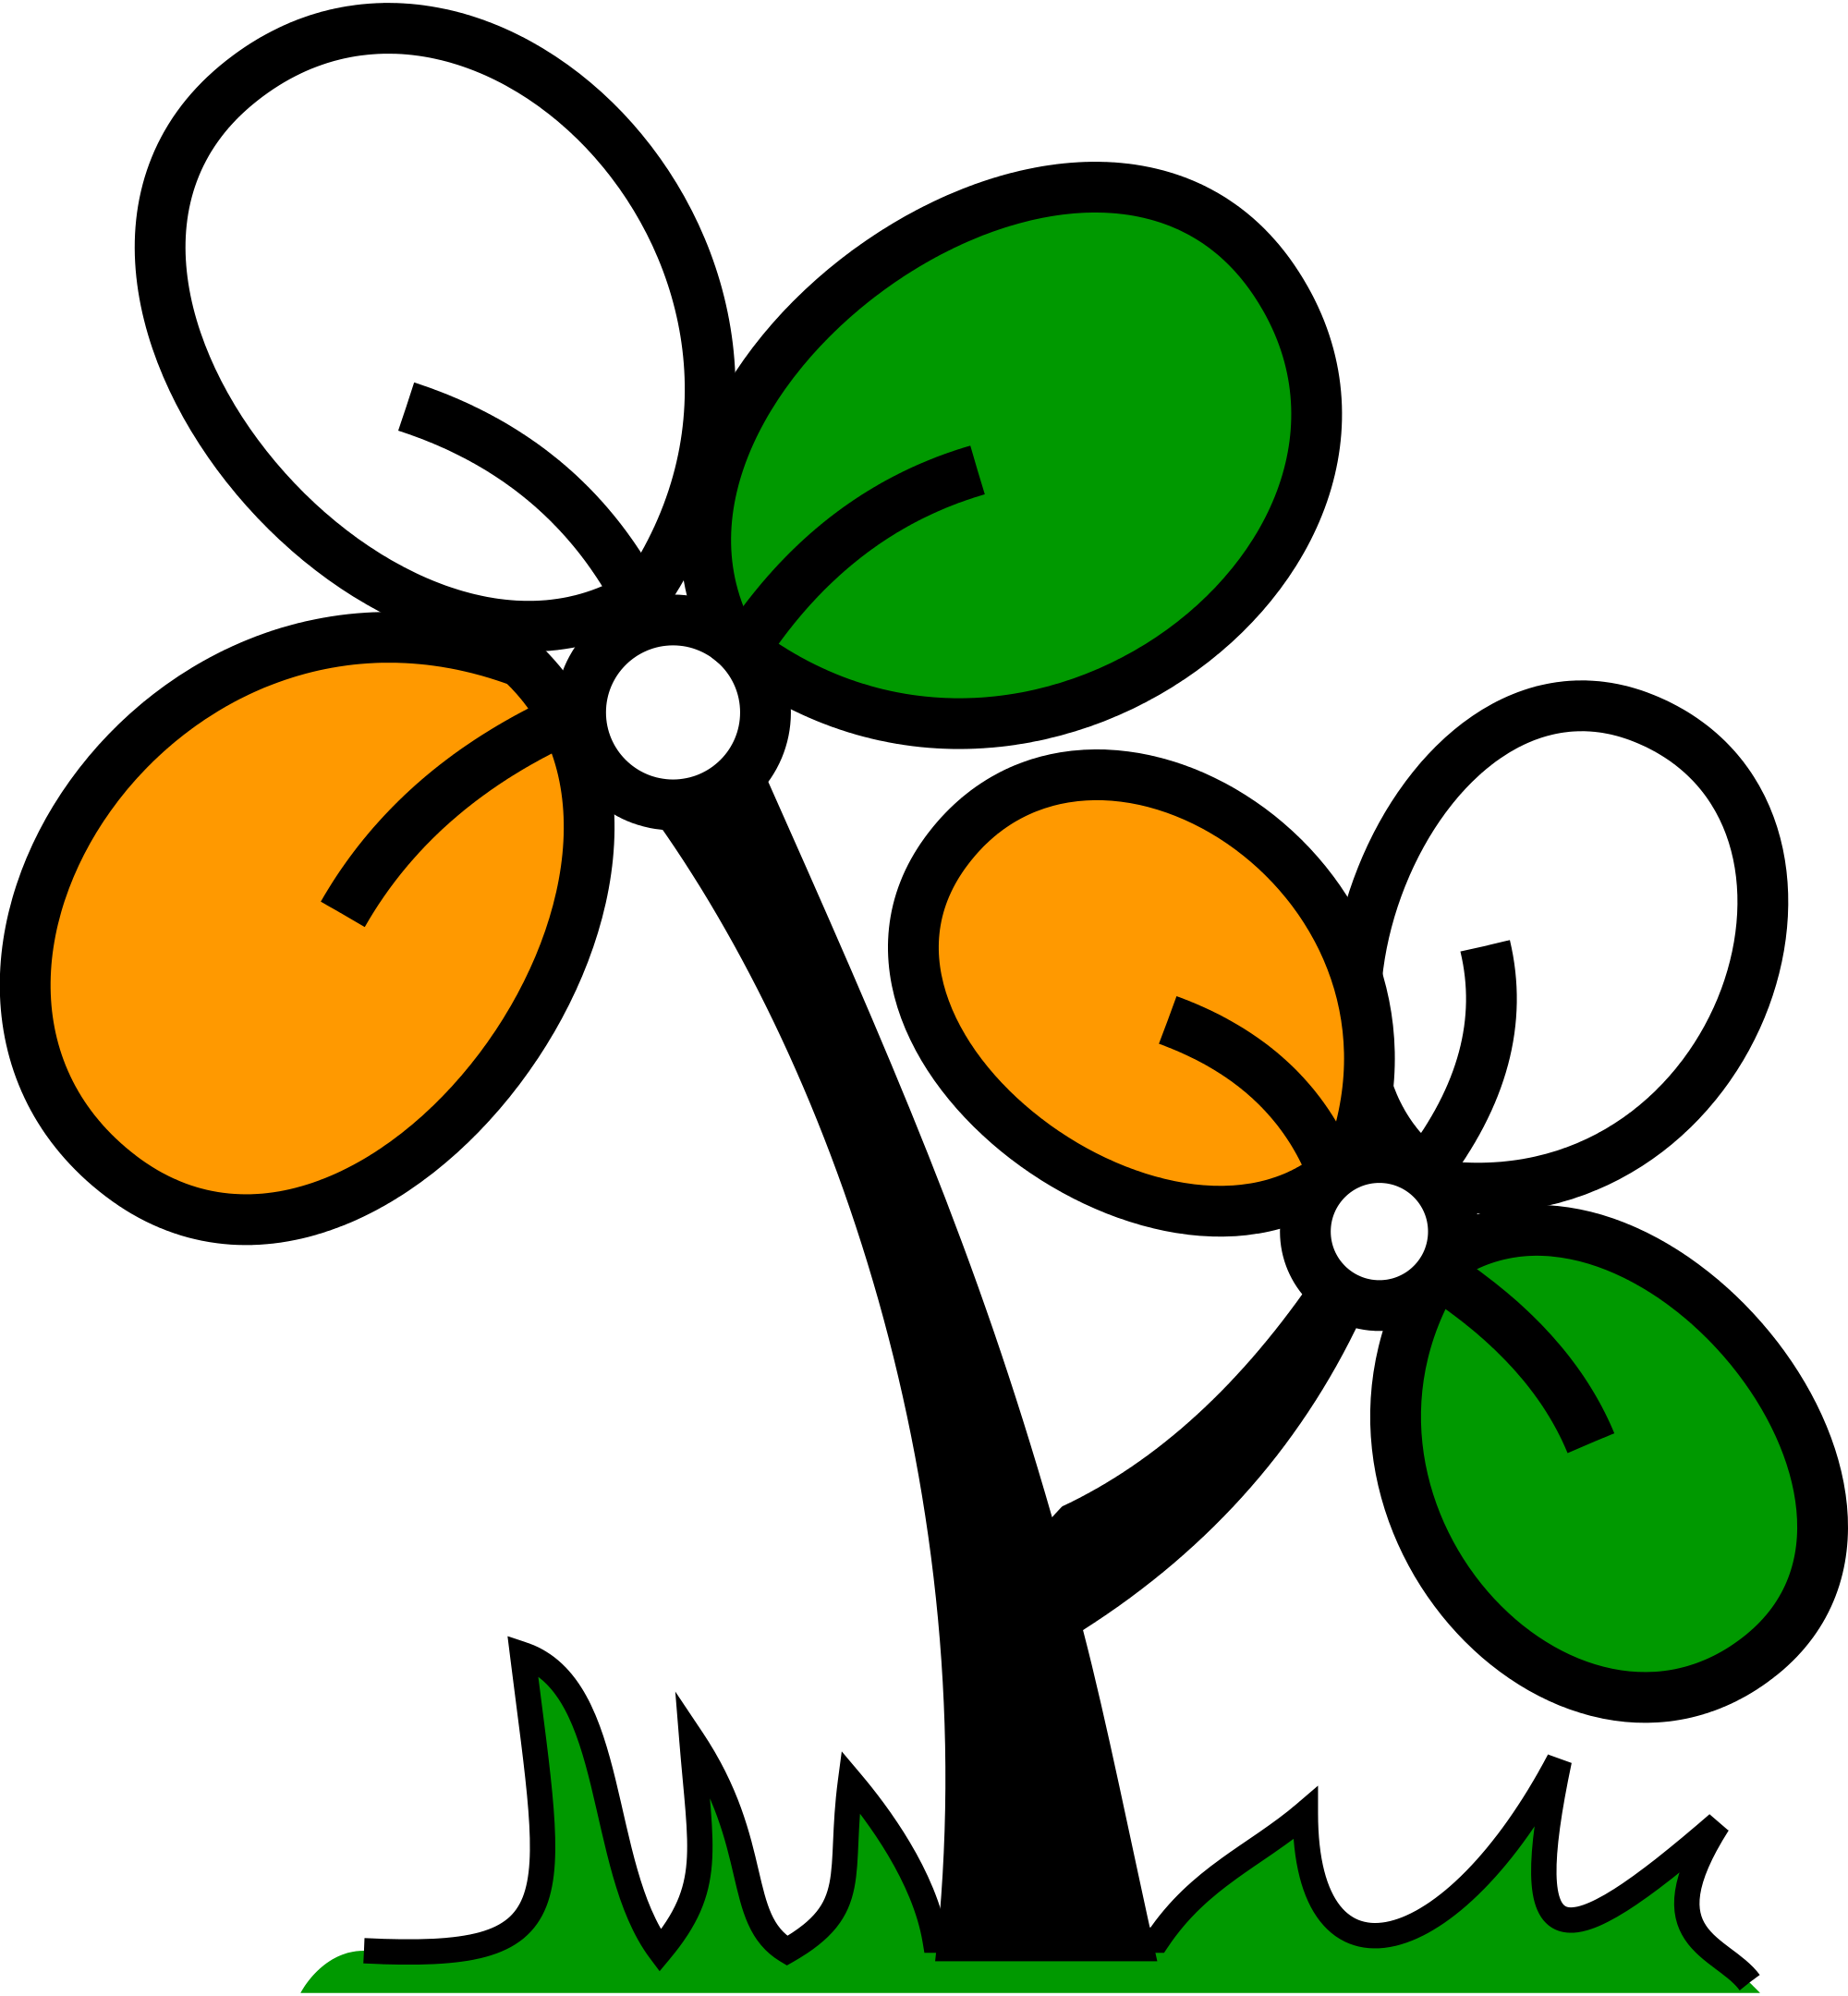 All India Trinamool Congress Logo - All India Trinamool Congress (2000x2160)